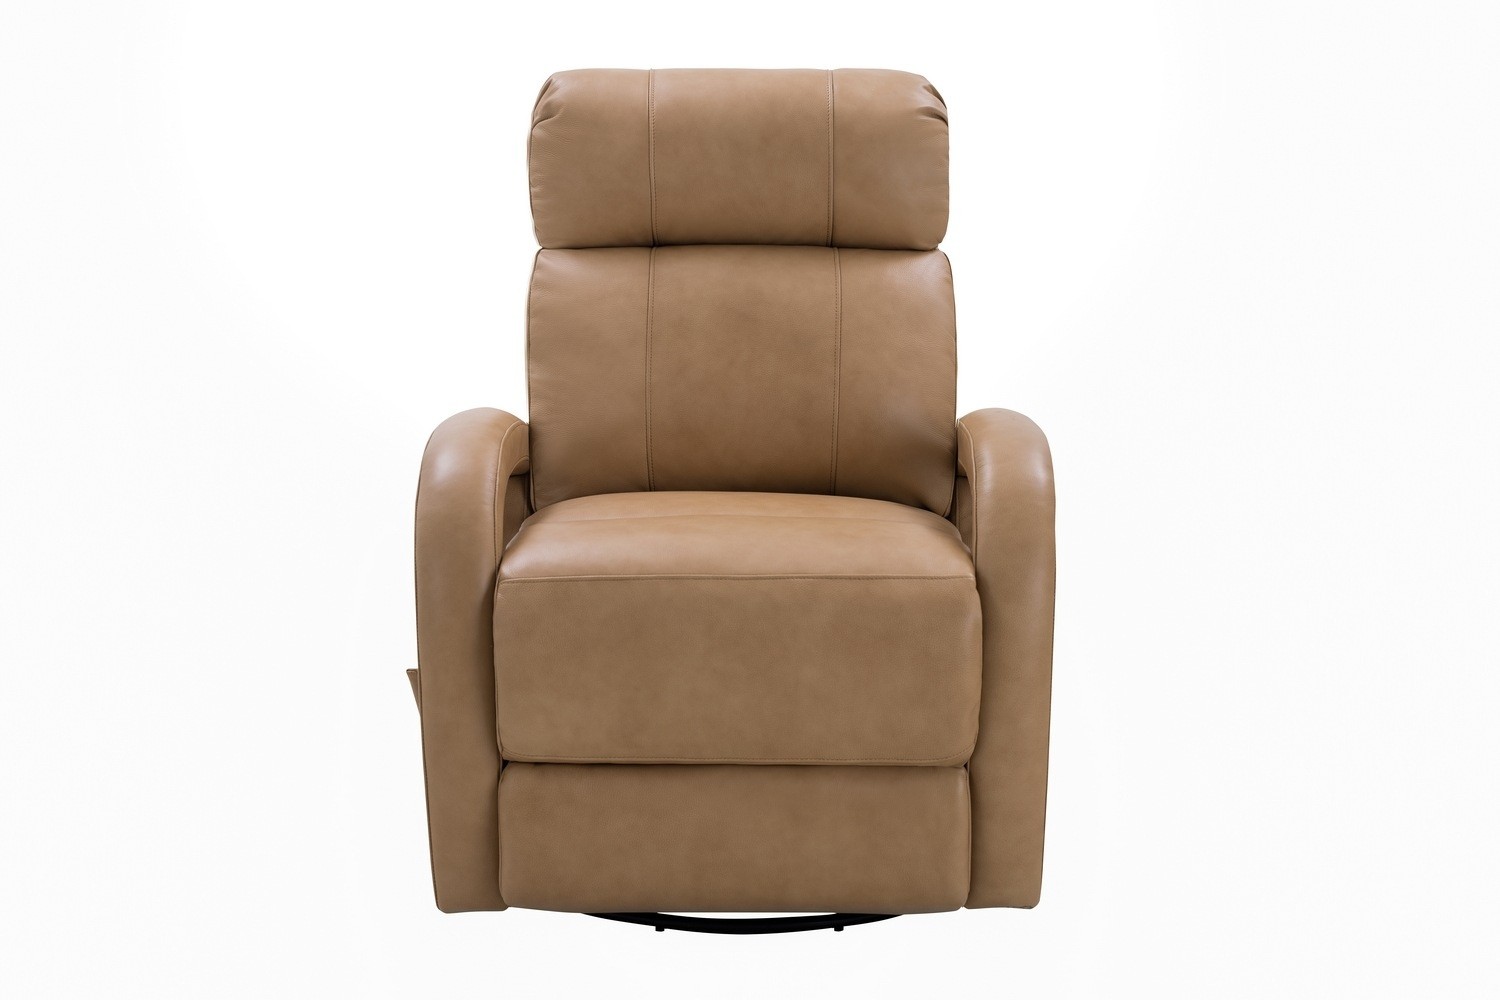 Barcalounger Harvey Swivel Glider Recliner Chair - Prestin Tuscan Sun/All Leather